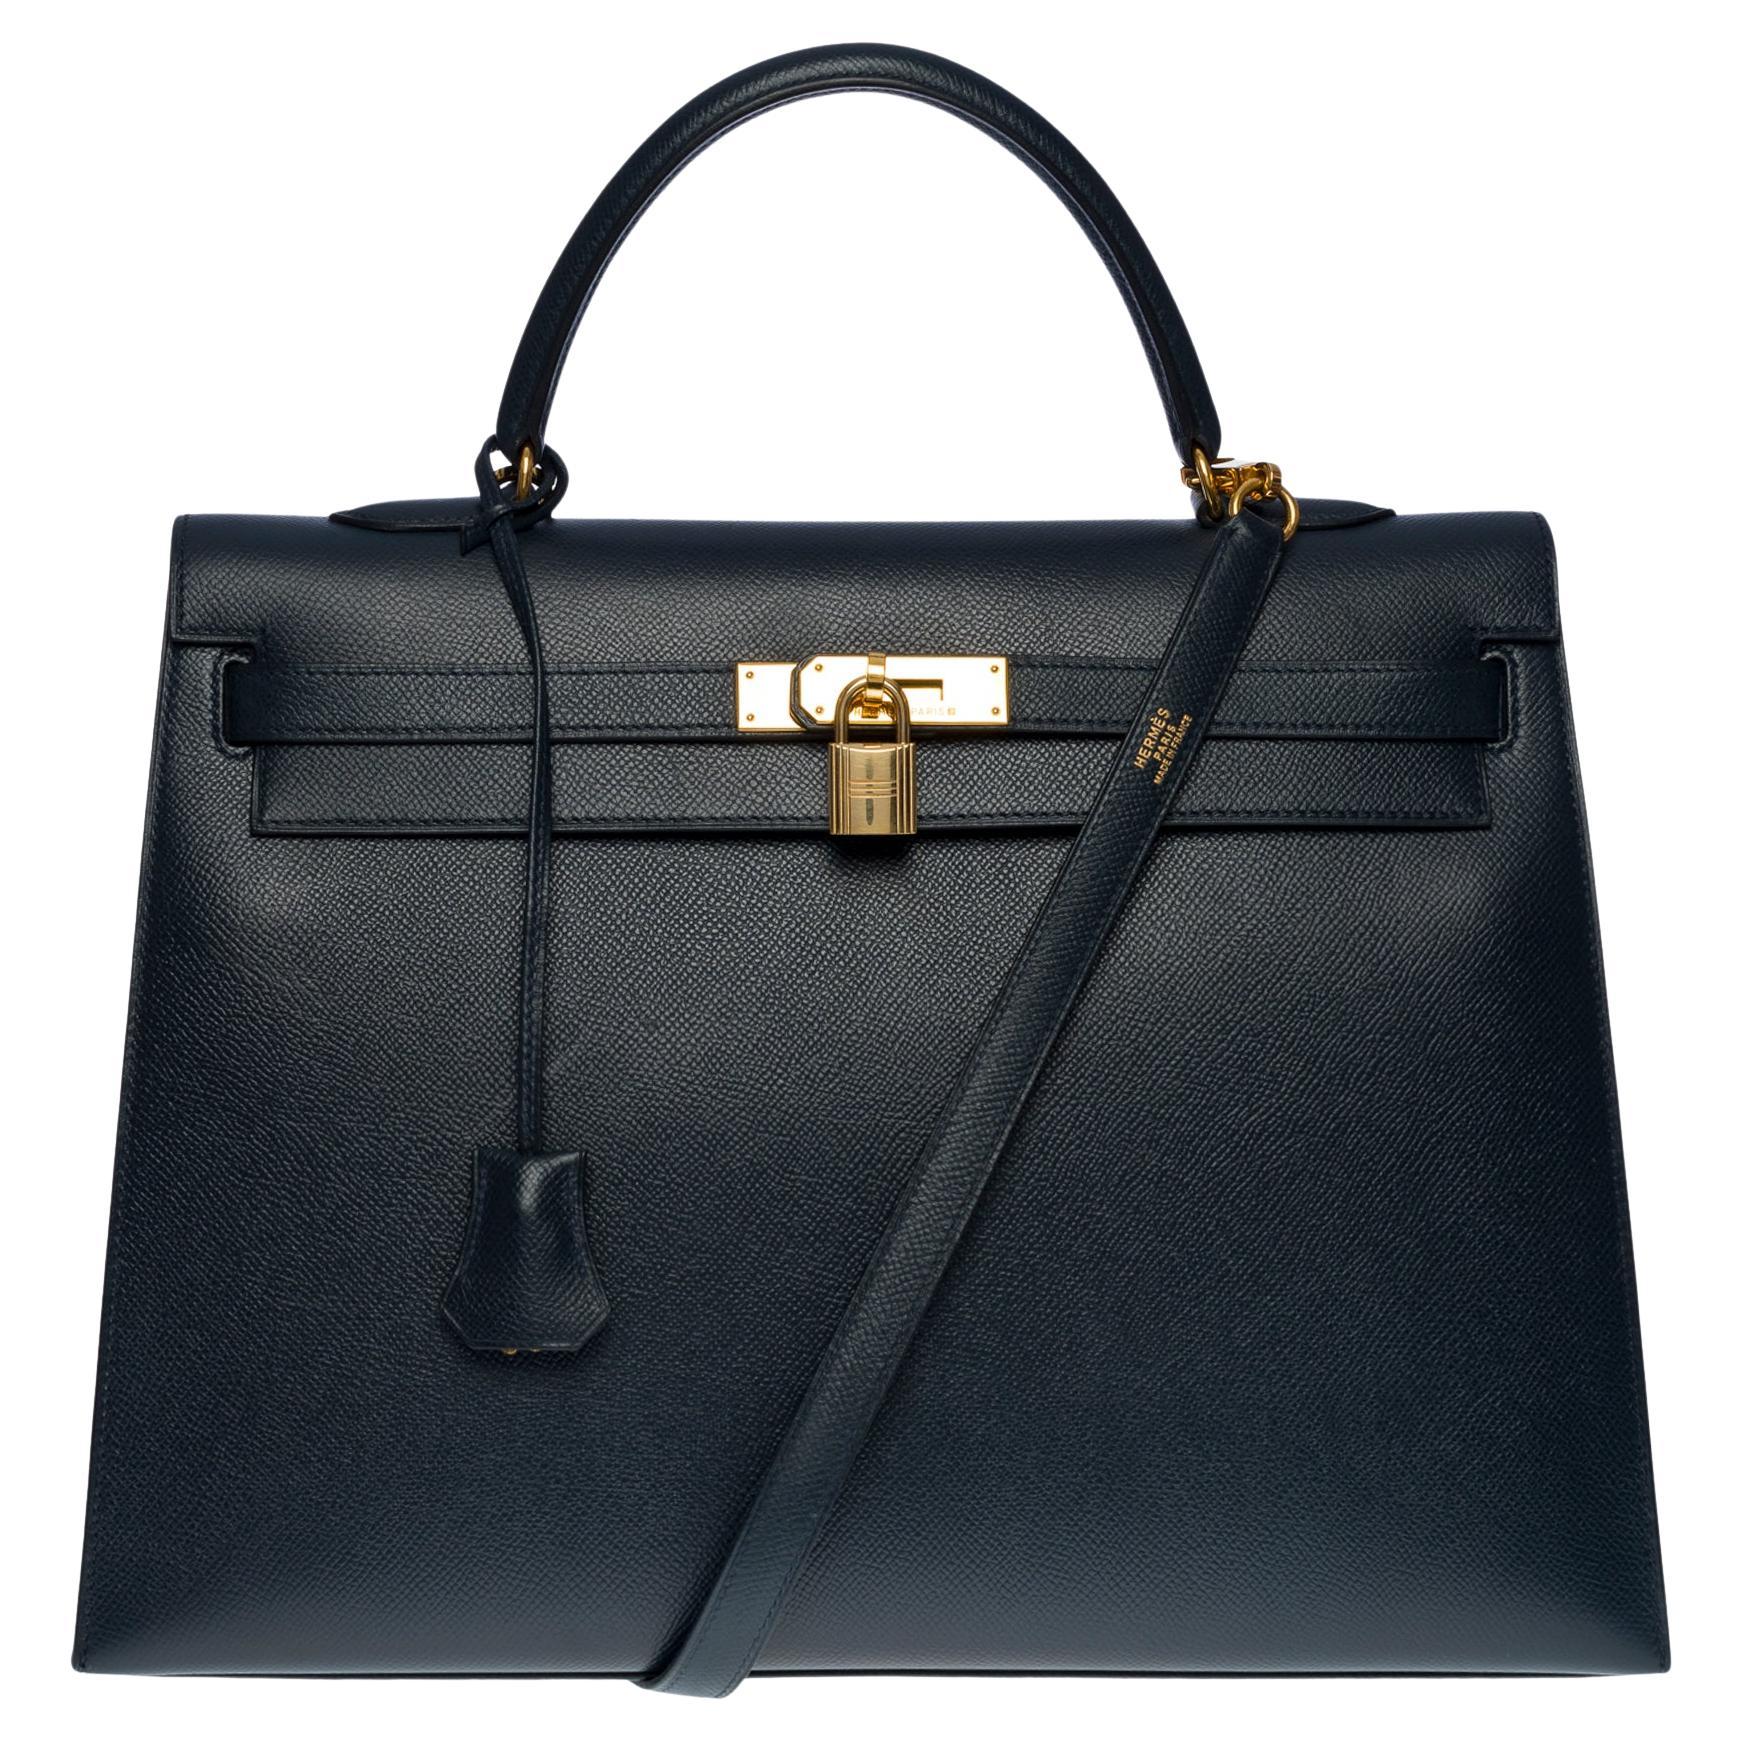 Hermès Kelly 35 sellier handbag strap in Courchevel bleu nuit leather, GHW